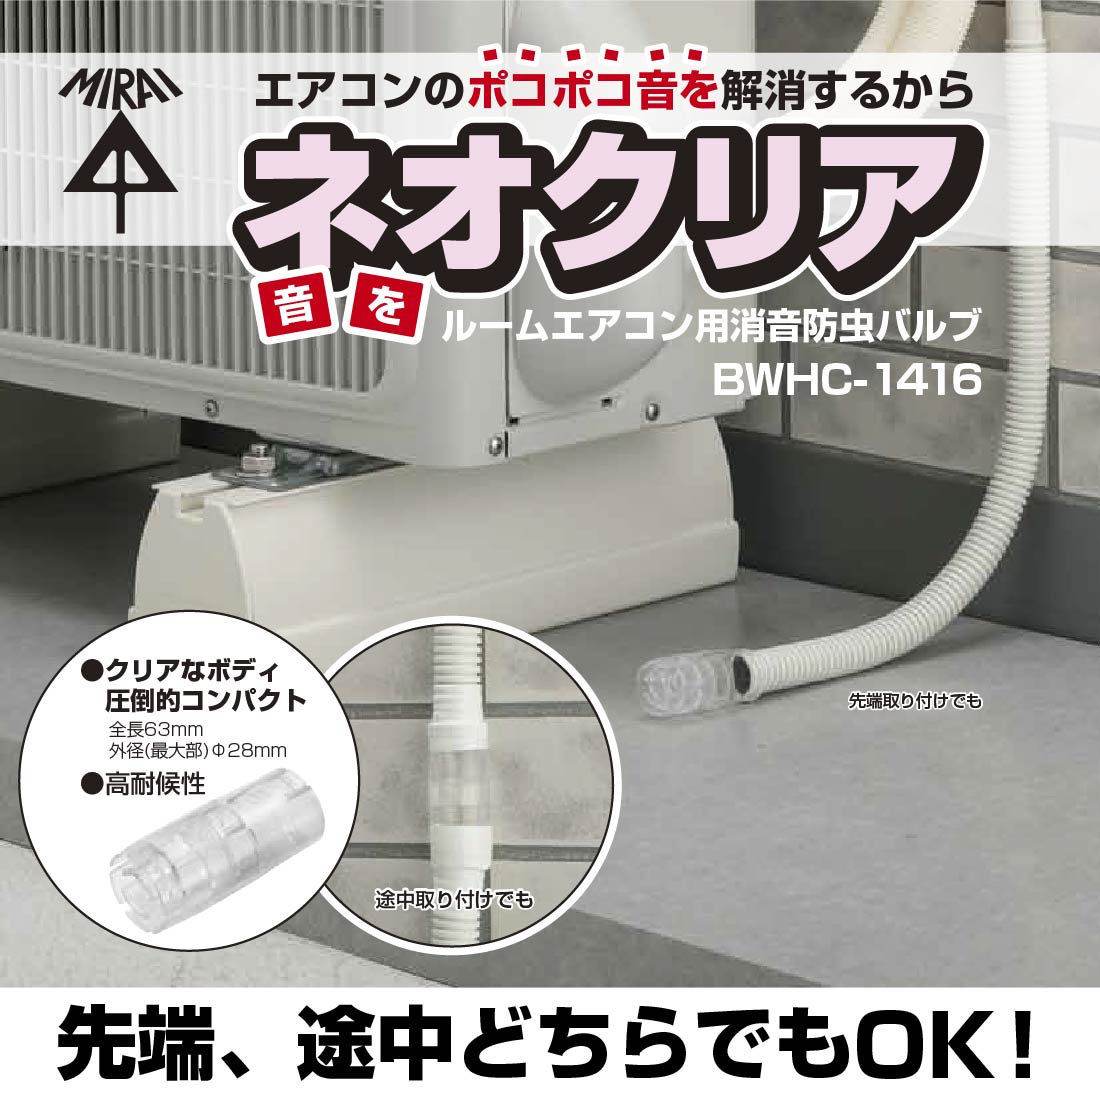 BWHC-1416 ネオクリア ルームエアコン用 消音防虫バルブ 未来工業 : mi 